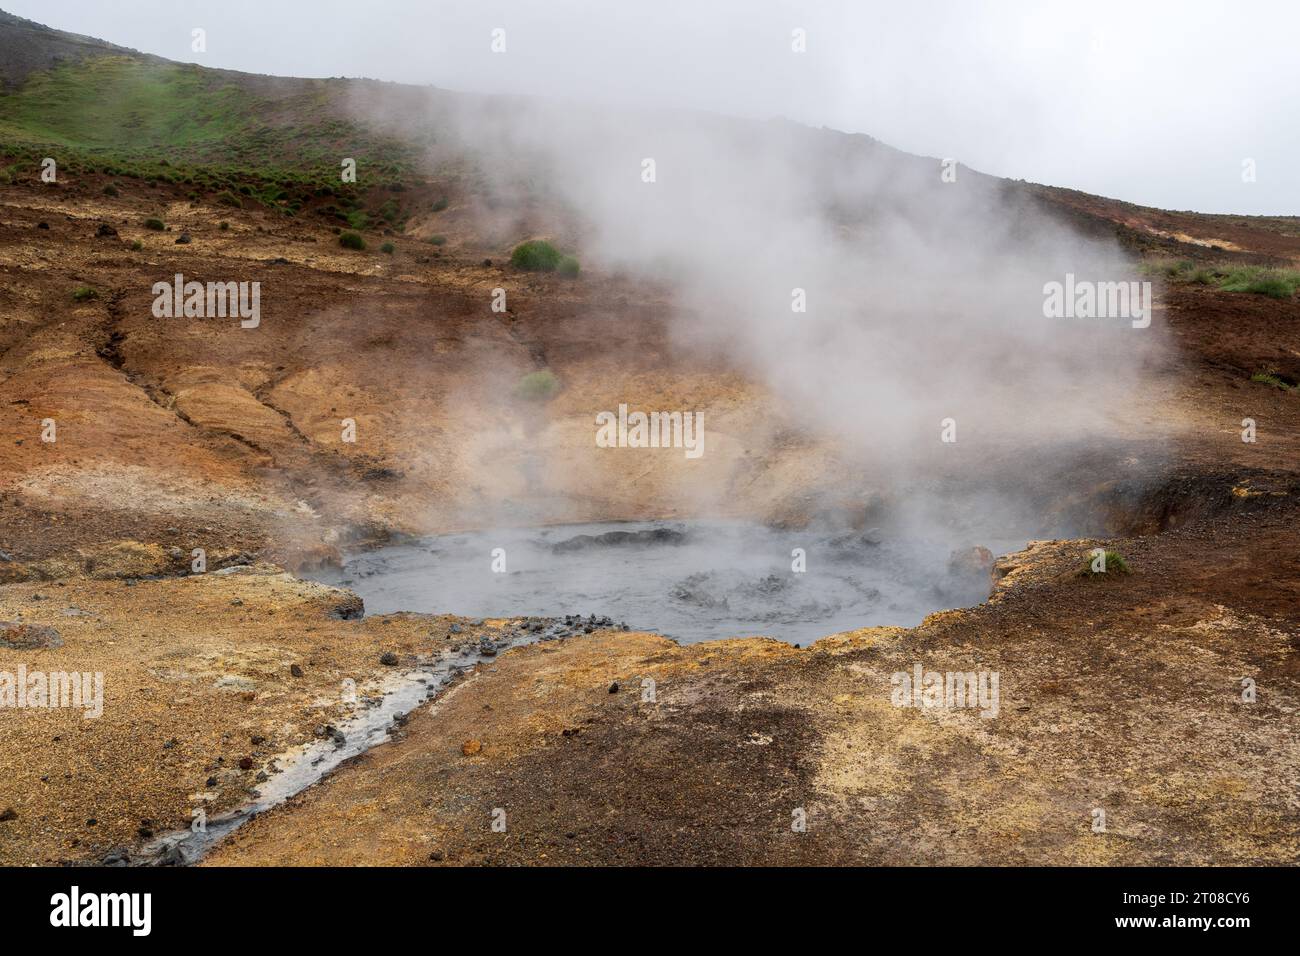 La zone géothermique de Krysuvik en Islande Banque D'Images